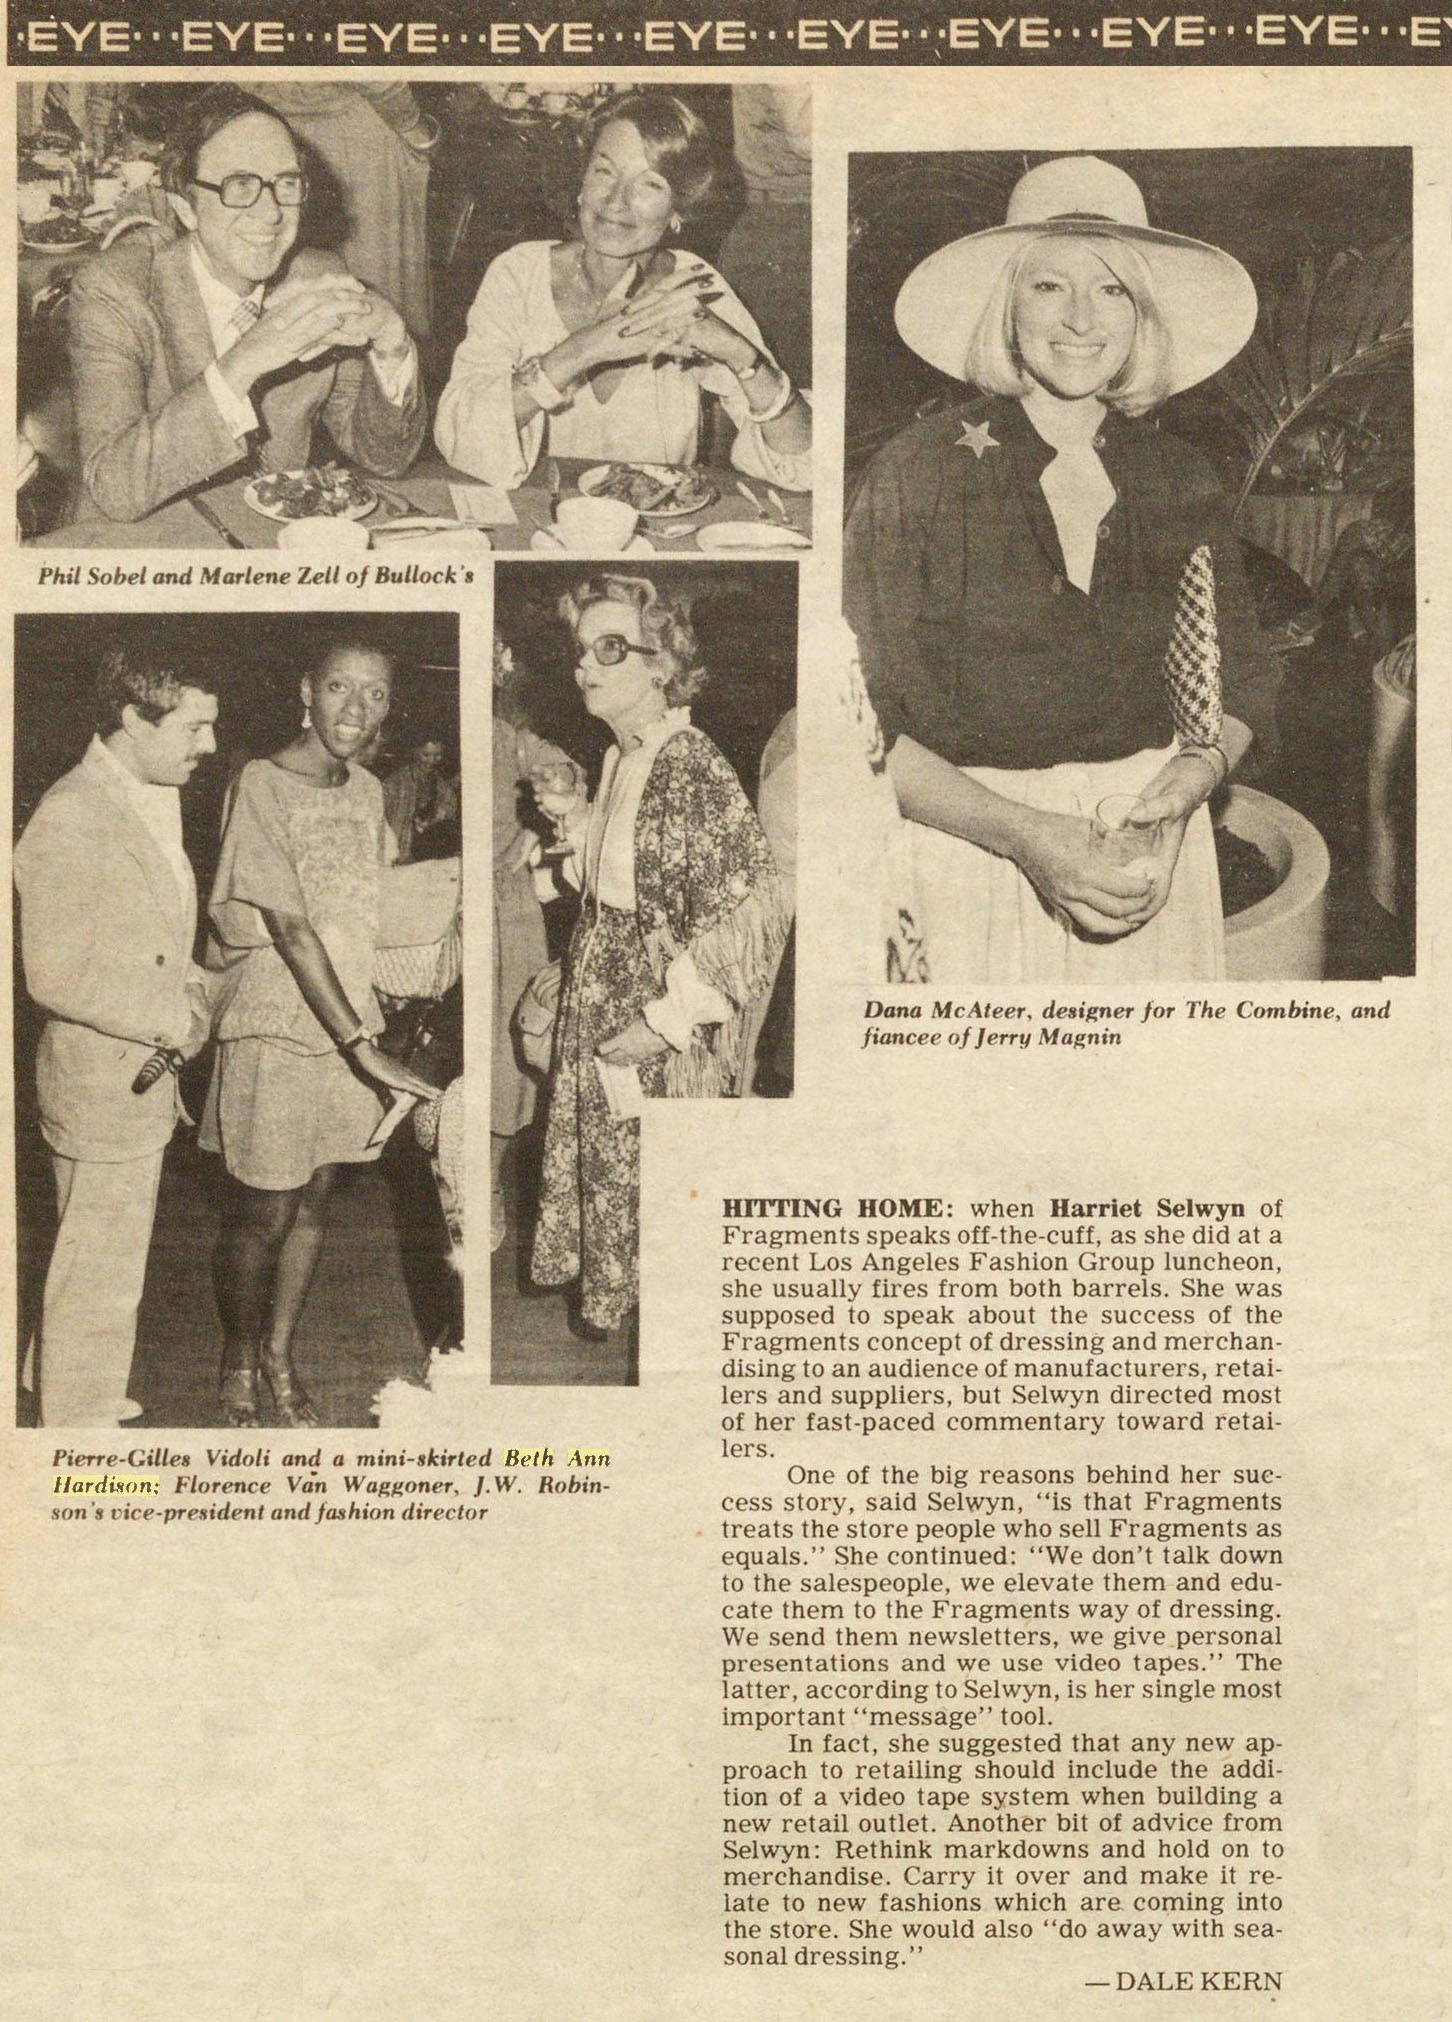 Los Angeles Fashion Group Luncheon, WWD Jul. 1977